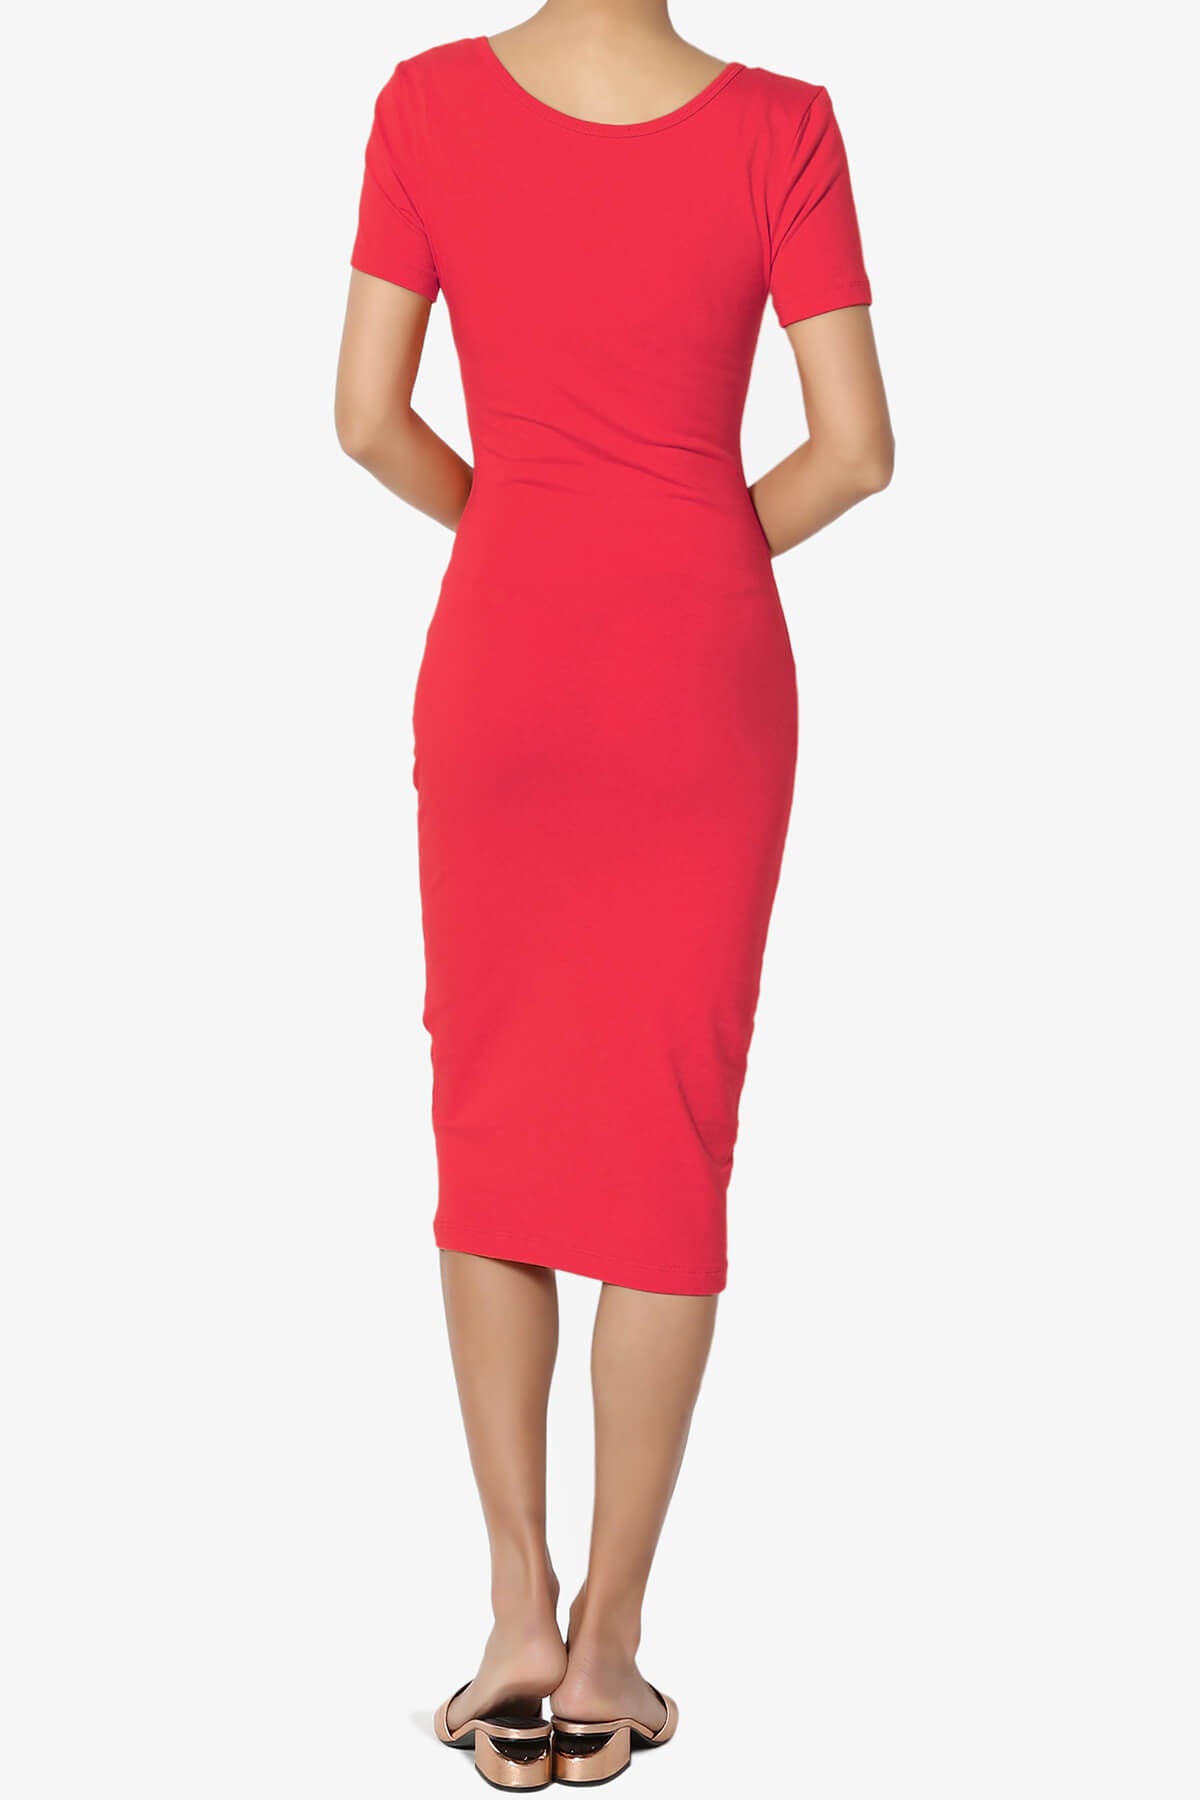 Fontella Short Sleeve Bodycon Dress RED_2